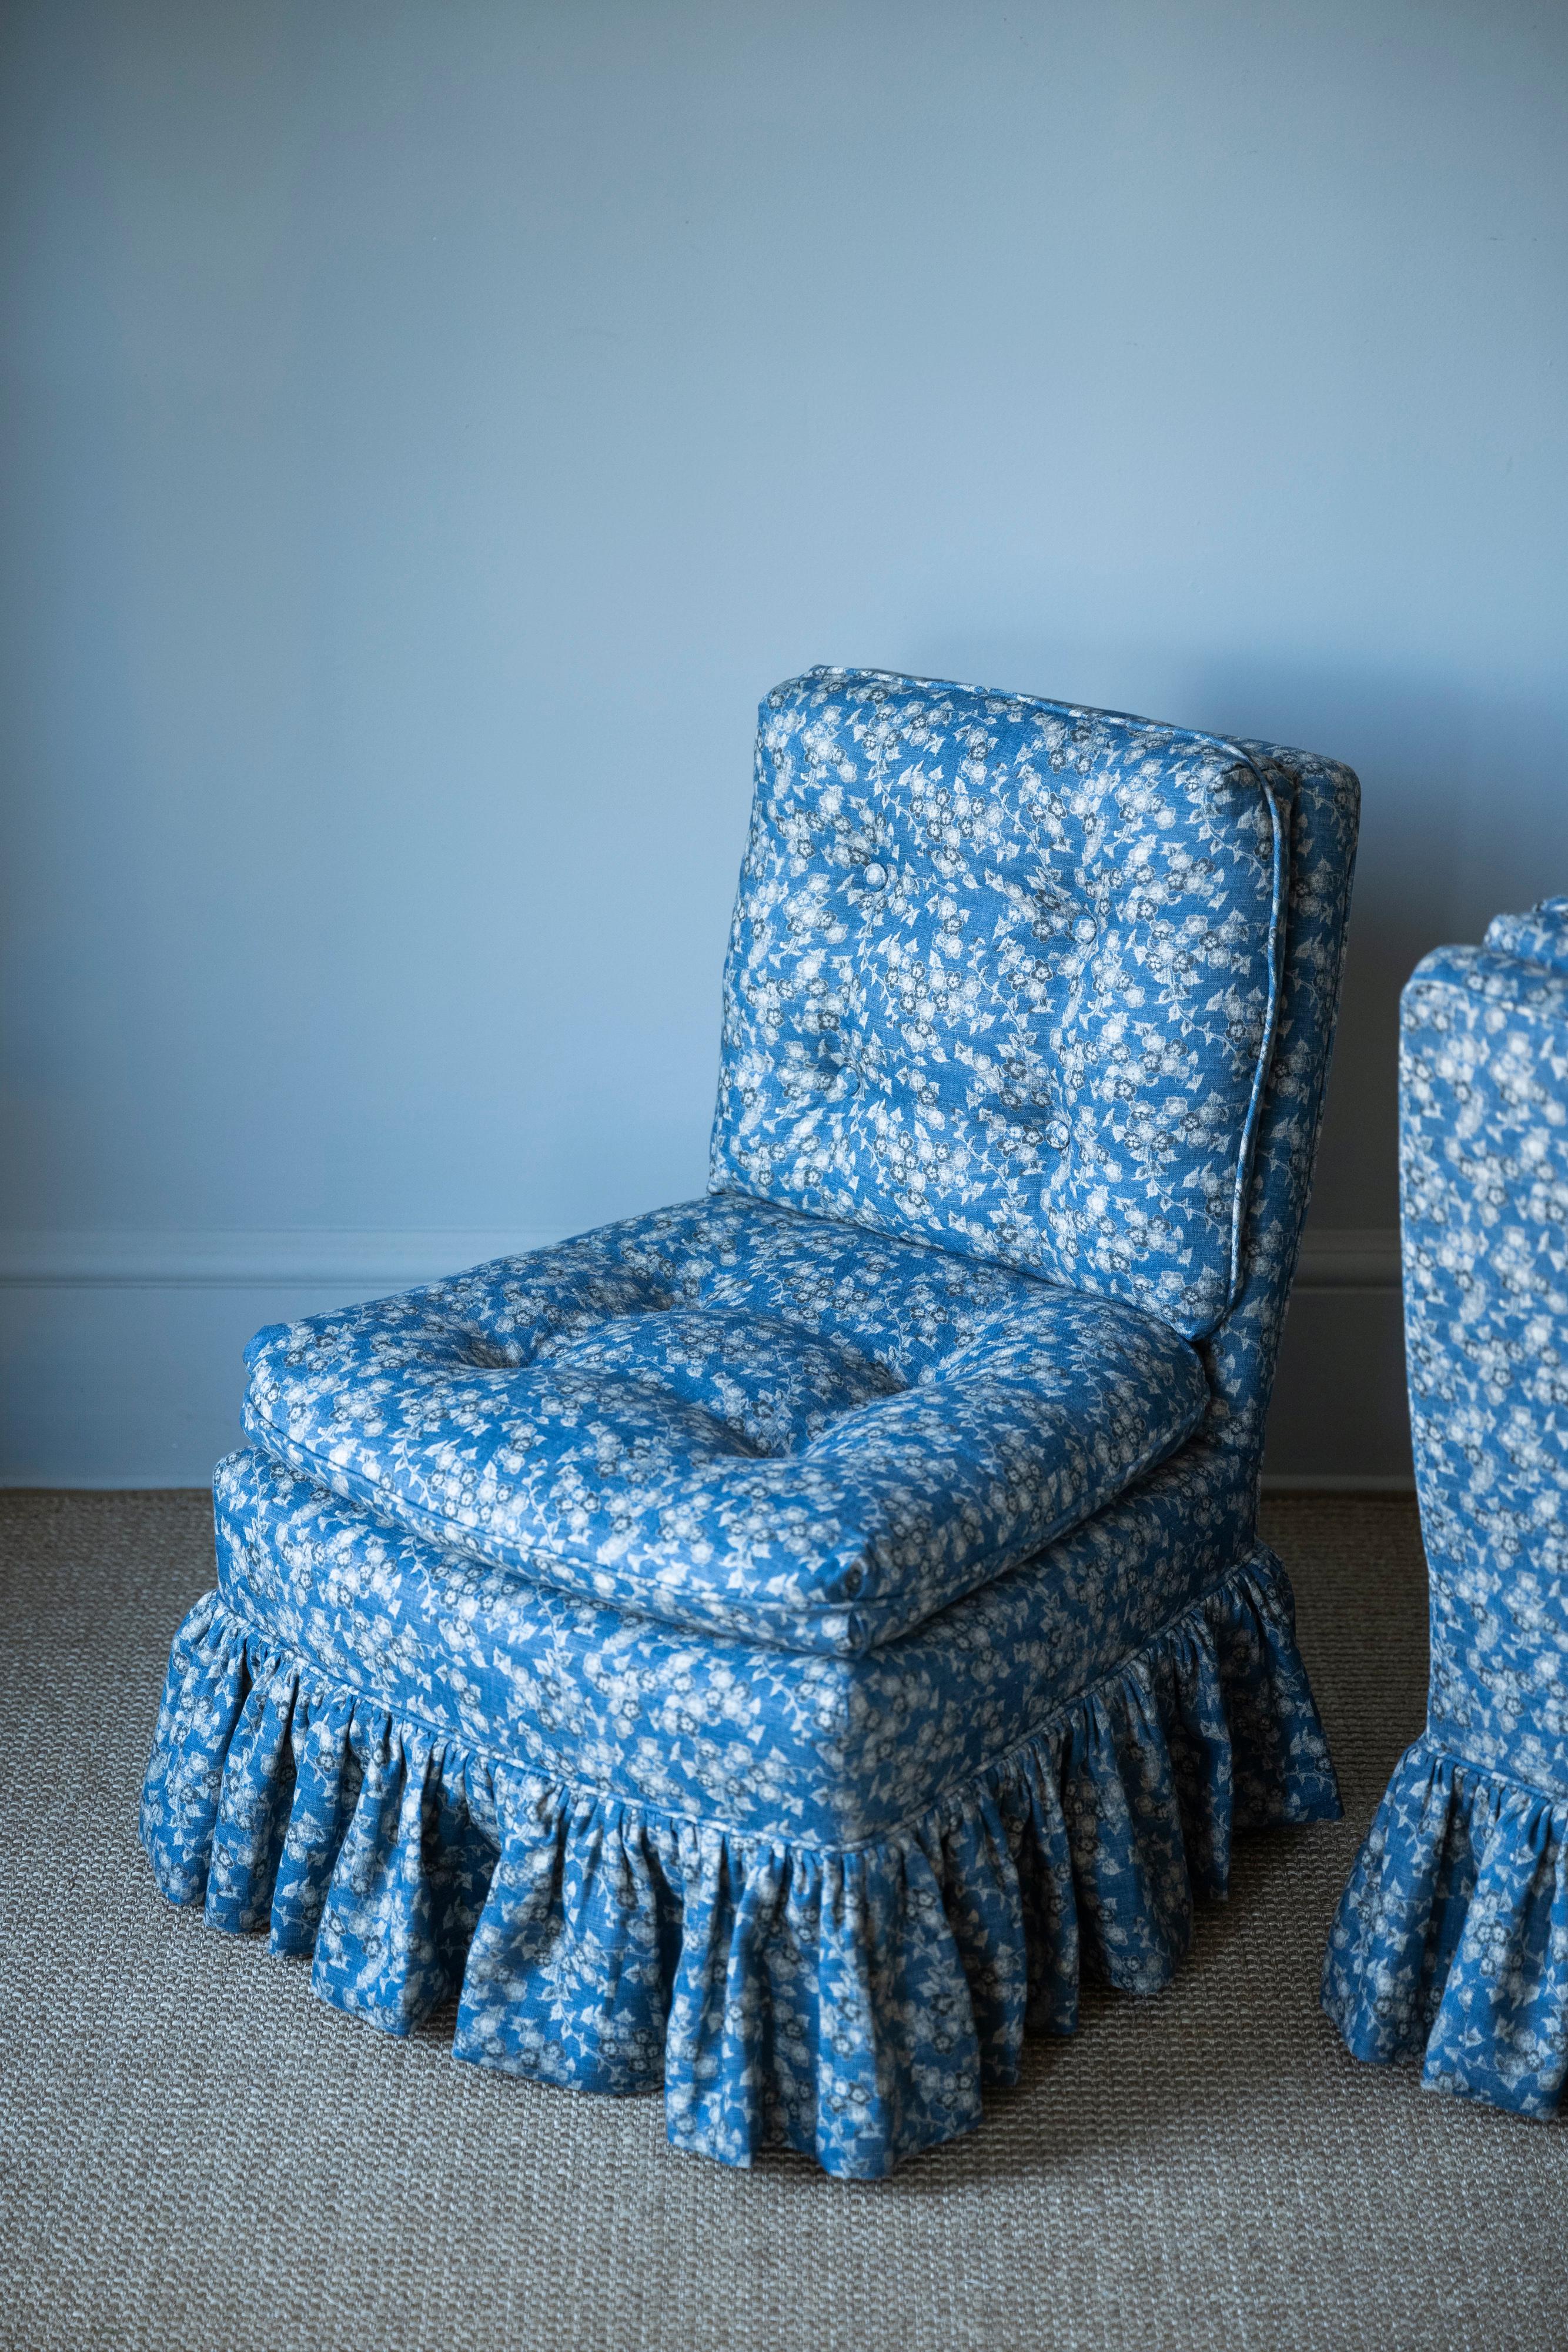 Reupholstered in Robert Kime fabric